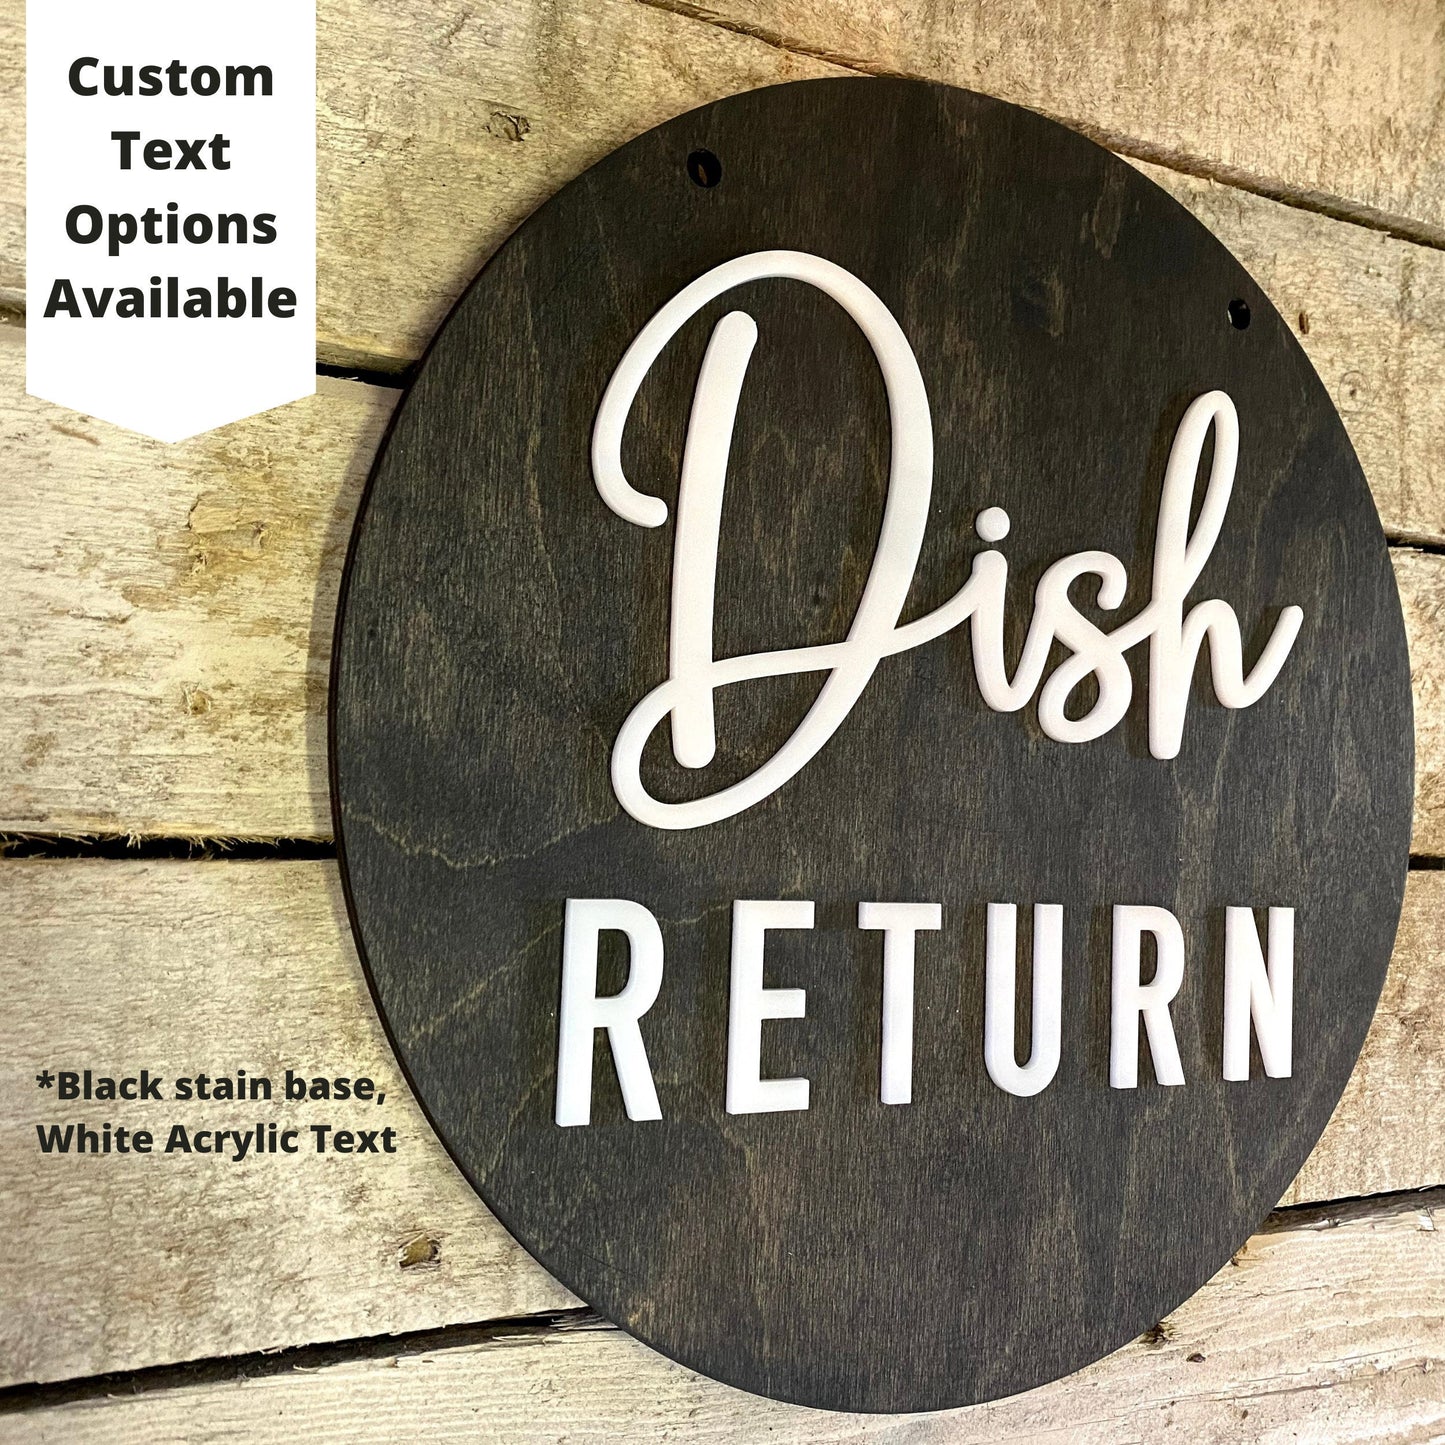 Dish Return BUSINESS Sign Wayfinding Custom COFFEE SHOP Restaurant Bakery Ice Cream Stand | Kitchen Cafe Decor Signs | Rustic Modern Display